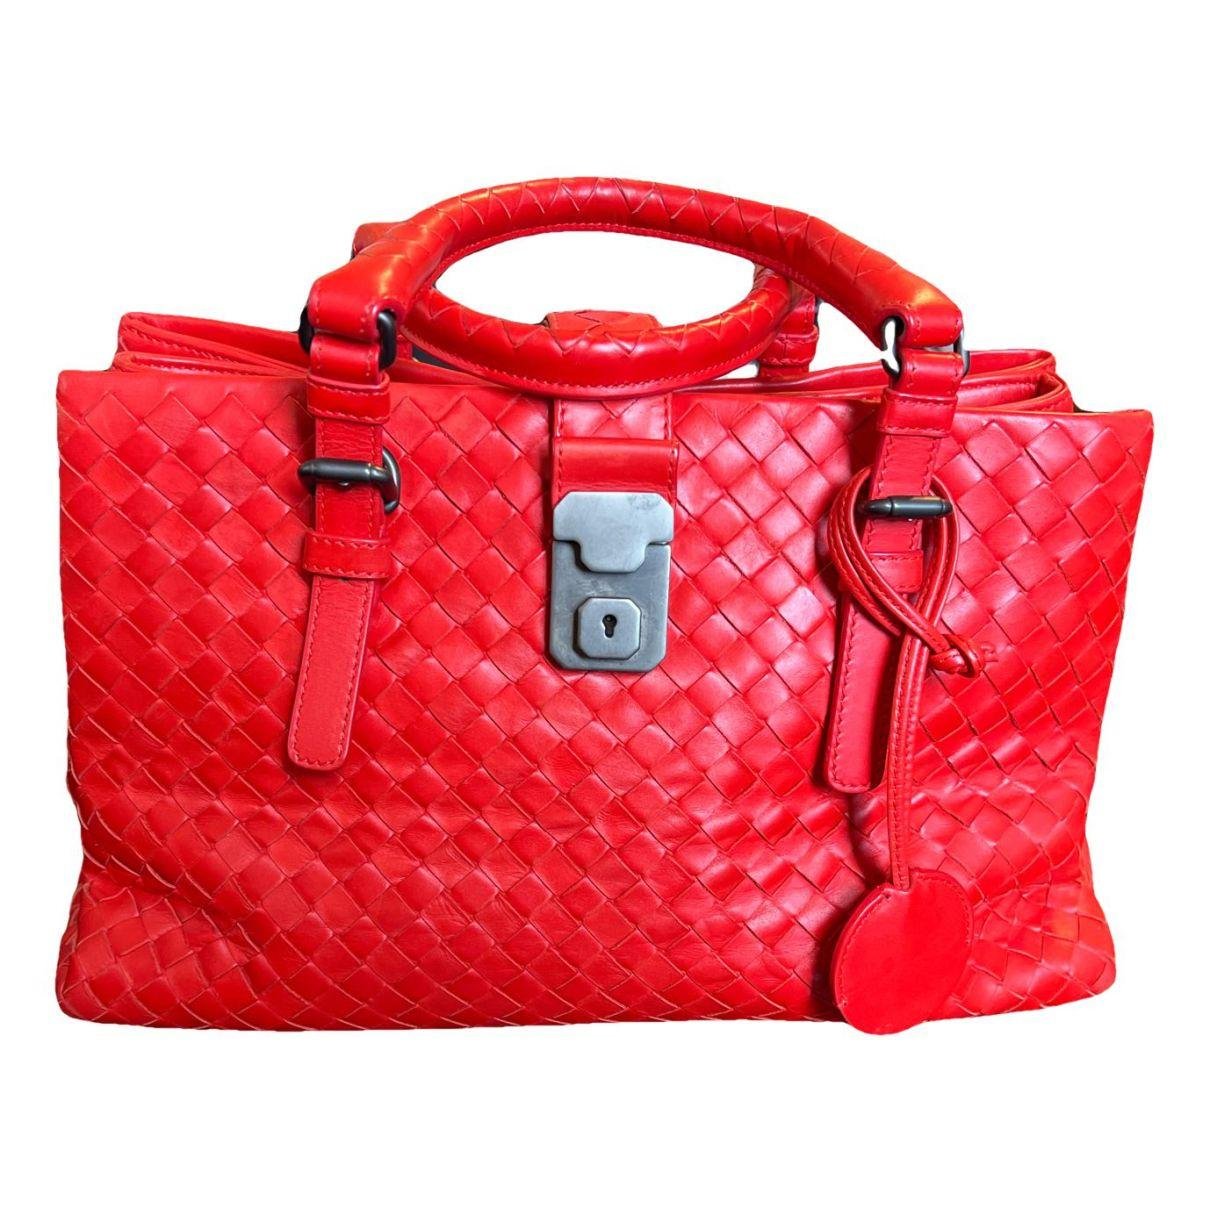 Roma leather handbag (Roma) by BOTTEGA VENETA